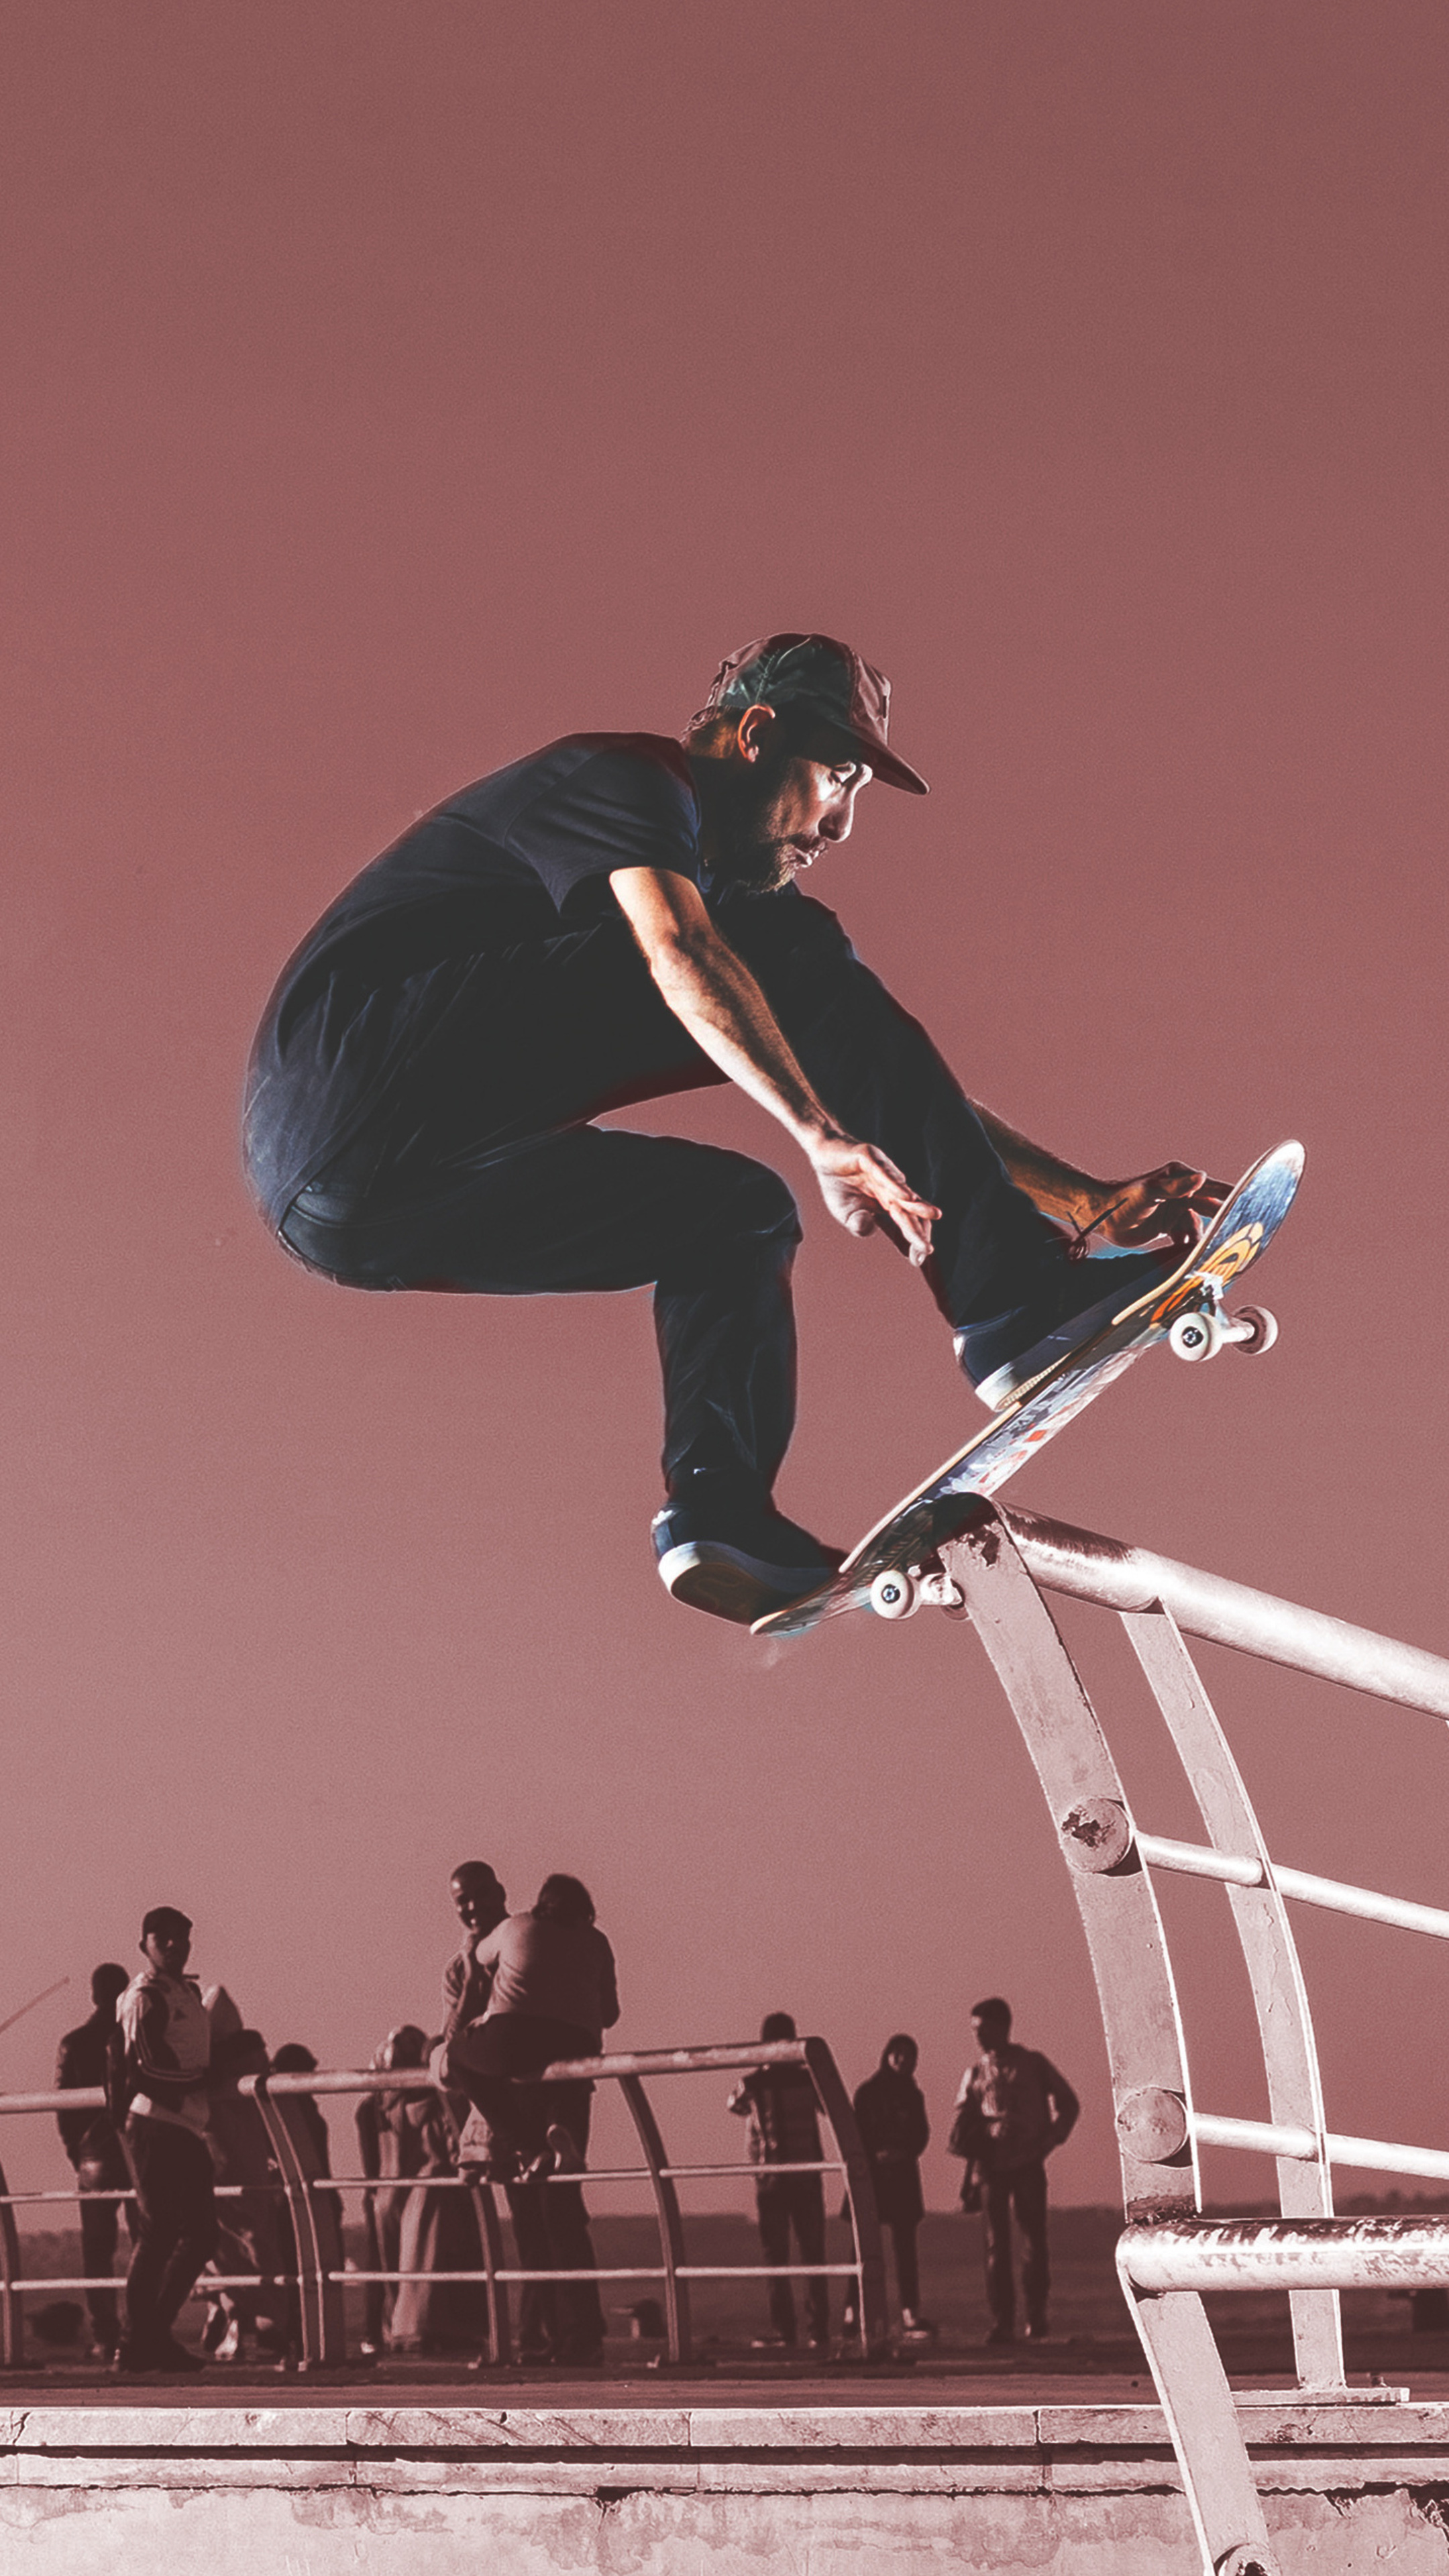 Stunt: Skateboard stuntman, Stunting show in the skate park. 2160x3840 4K Background.